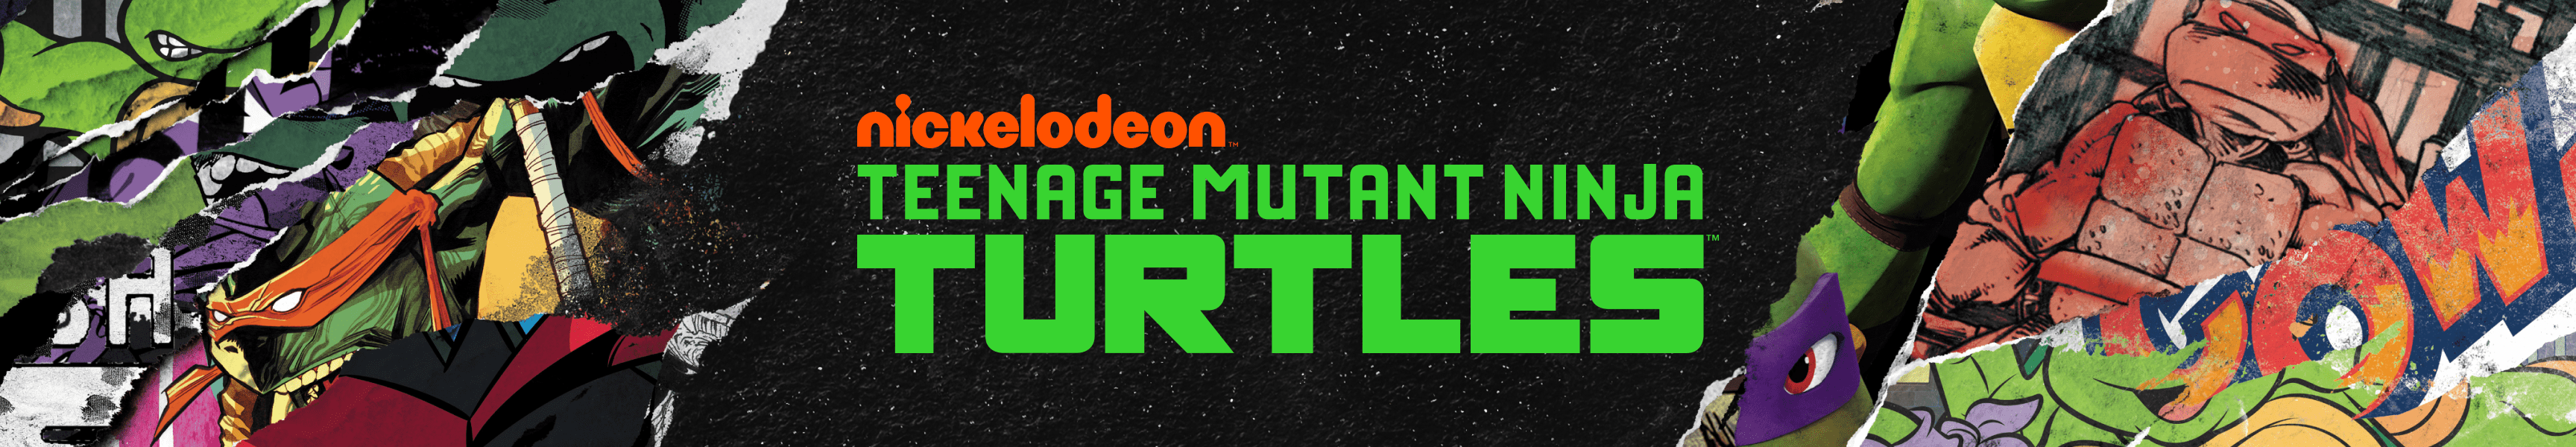 Teenage Mutant Ninja Turtles Pièces de collection